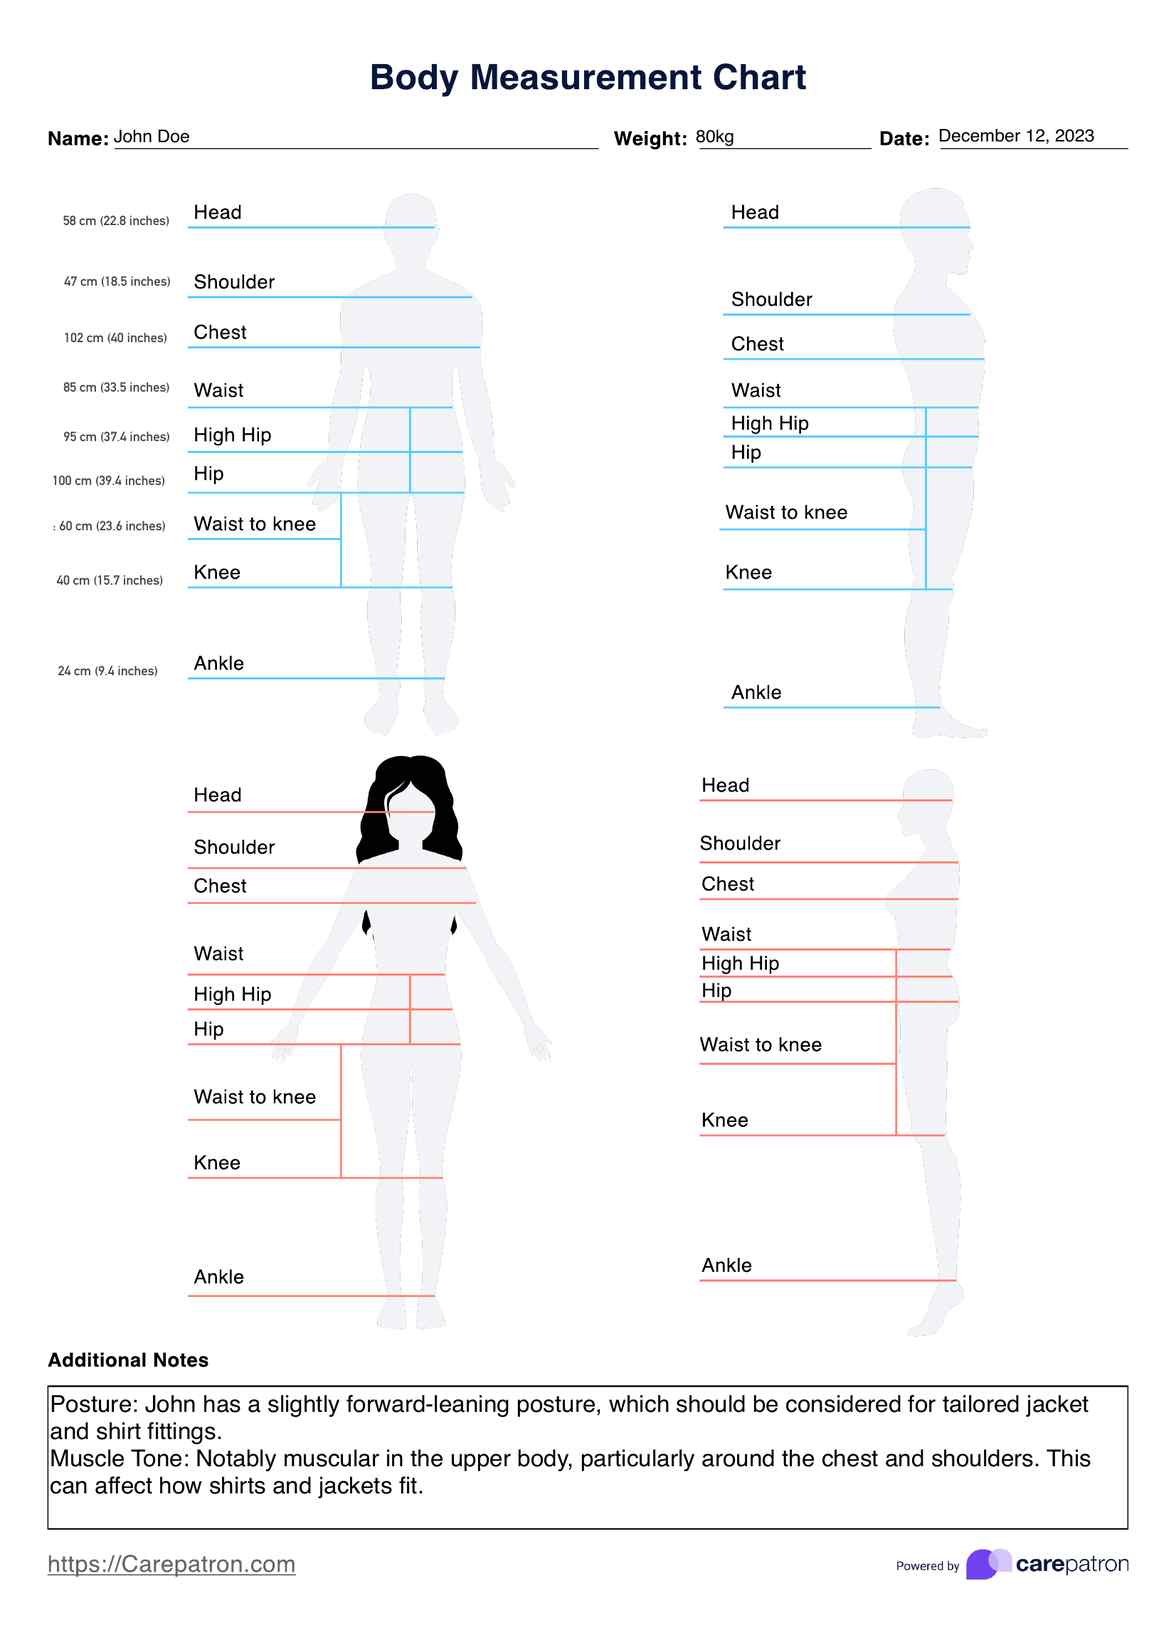 Body Measurement Chart PDF Example